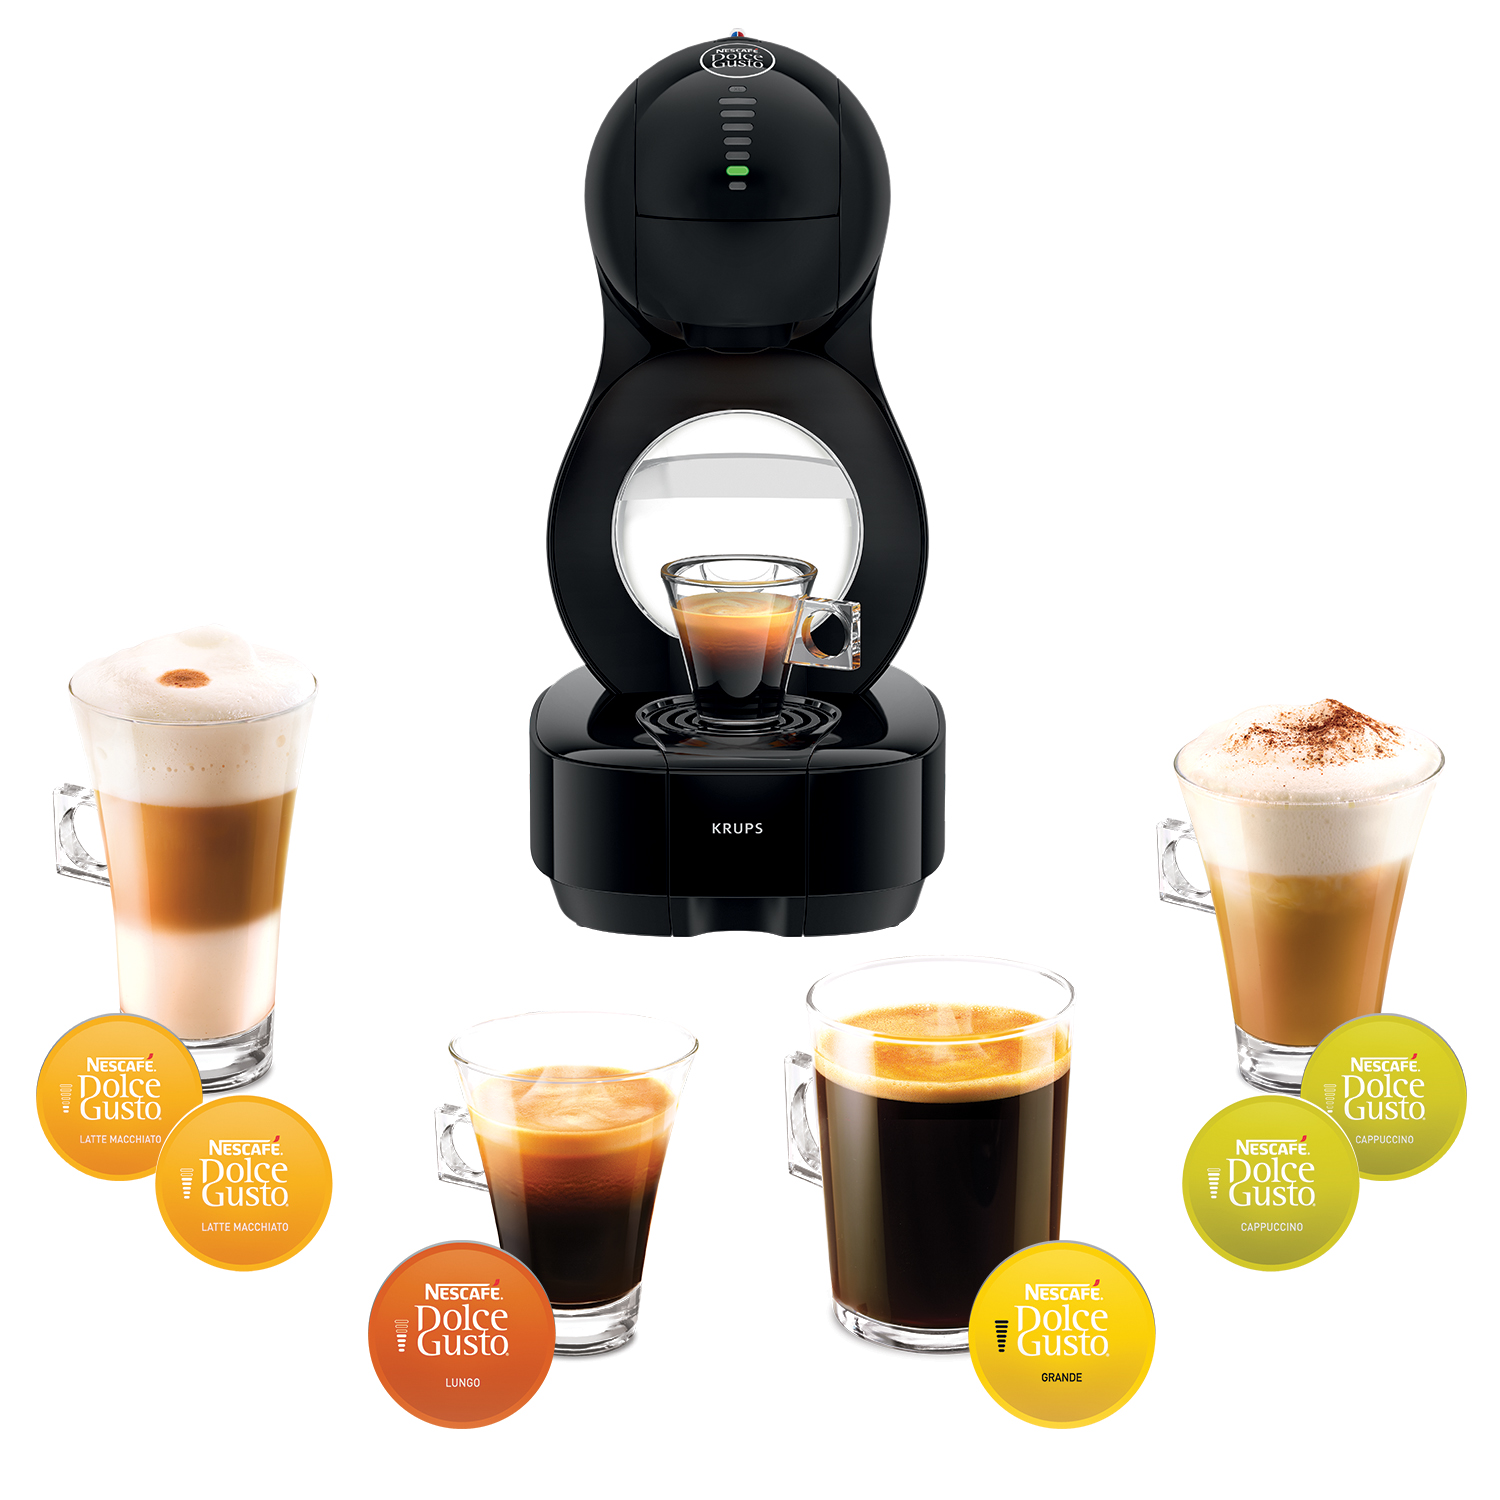 The Best Nescafe Coffee Machine Models! 